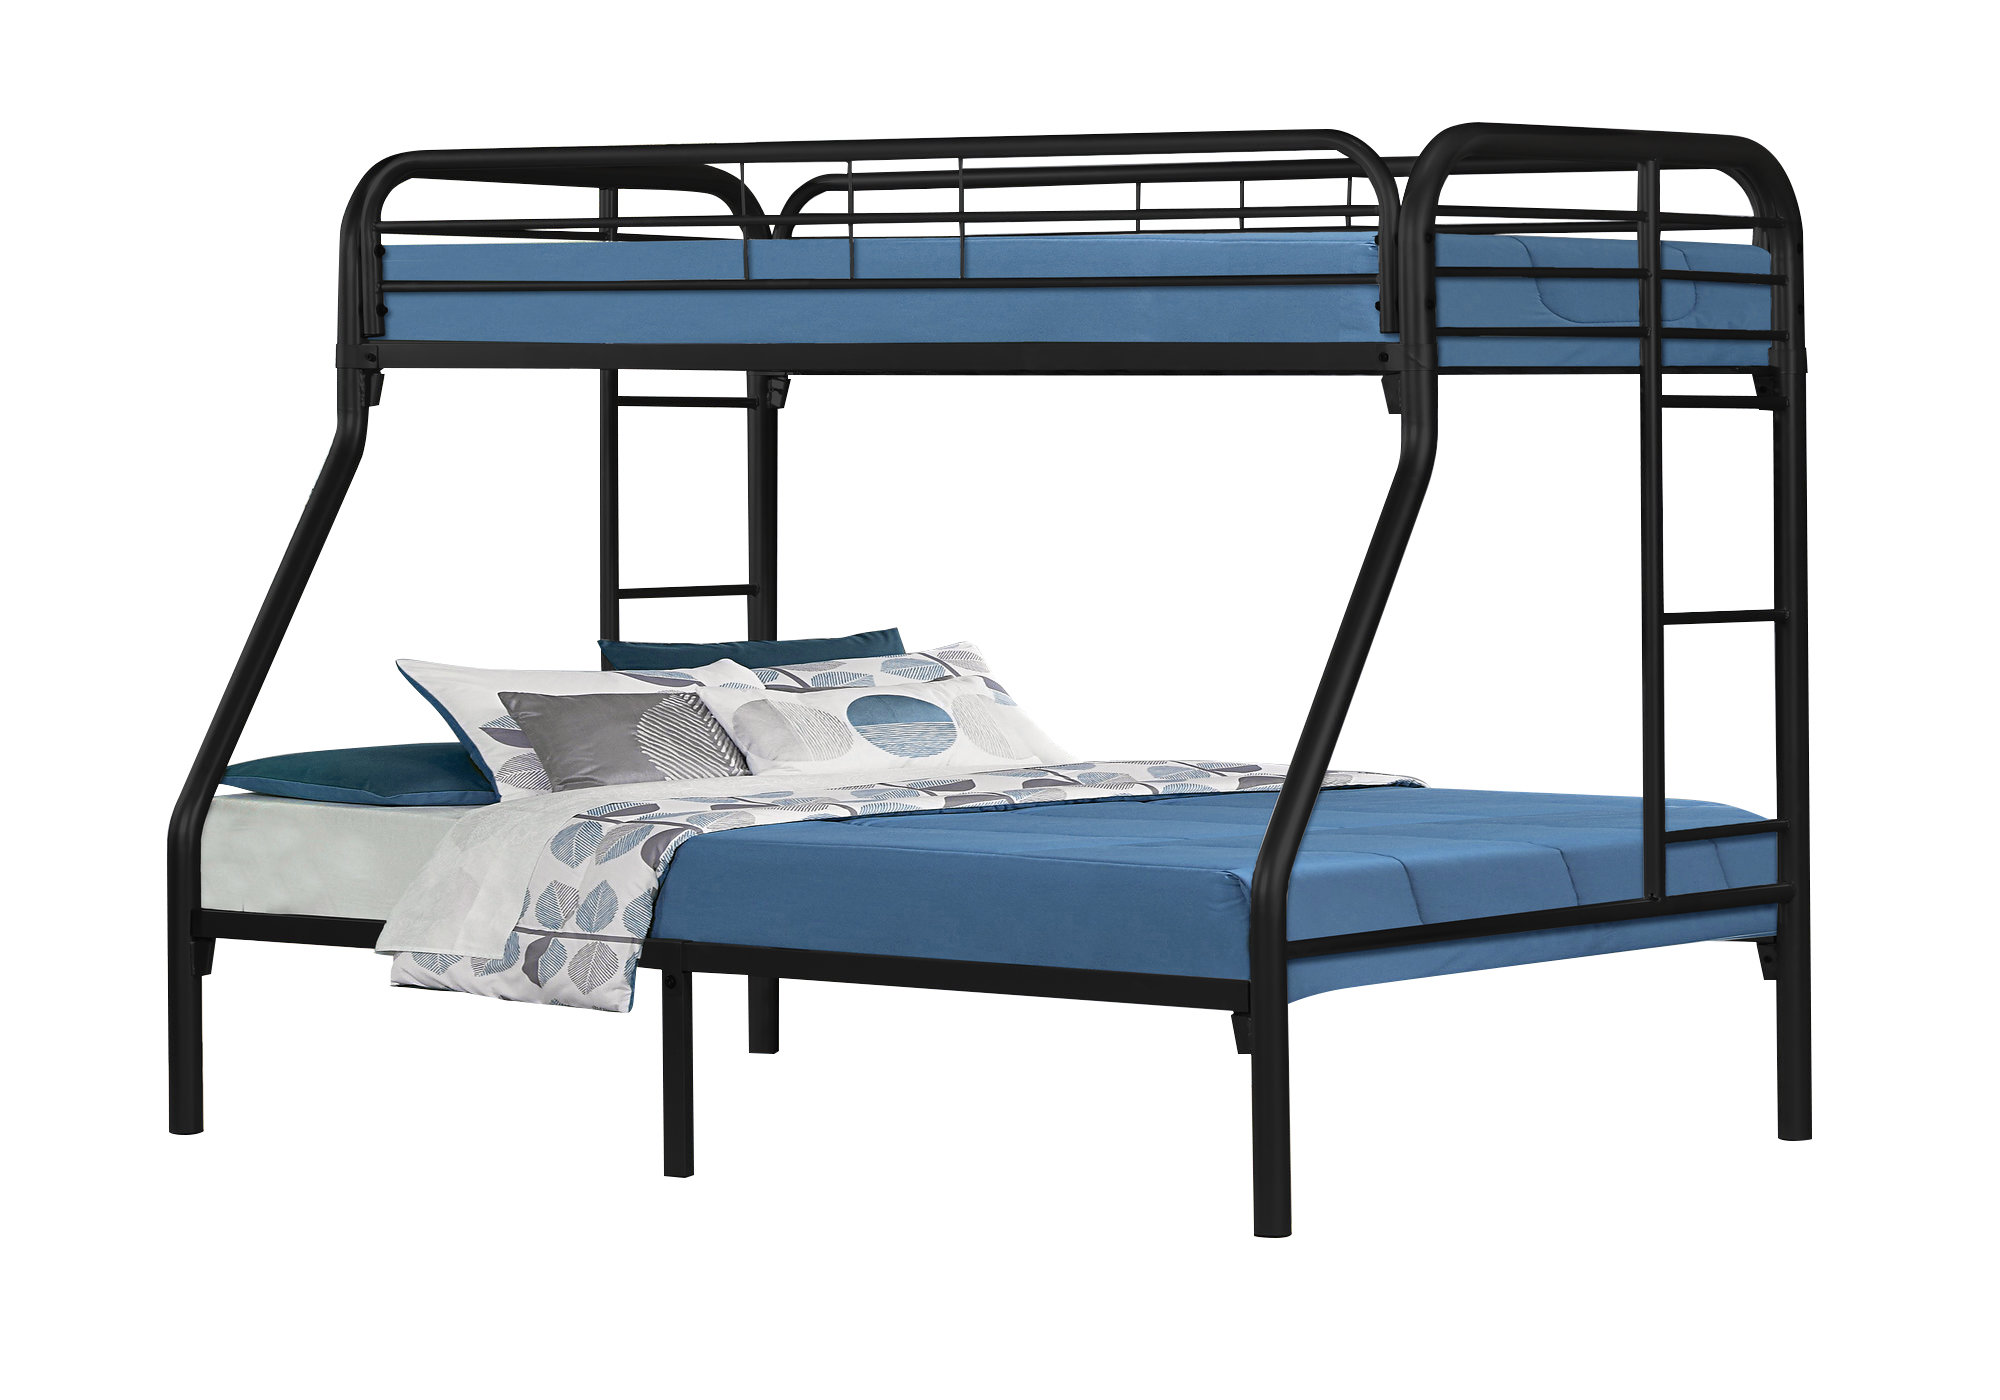 58" x 78" x 59.5" Black Metal Bunk Bed Twin Full Size